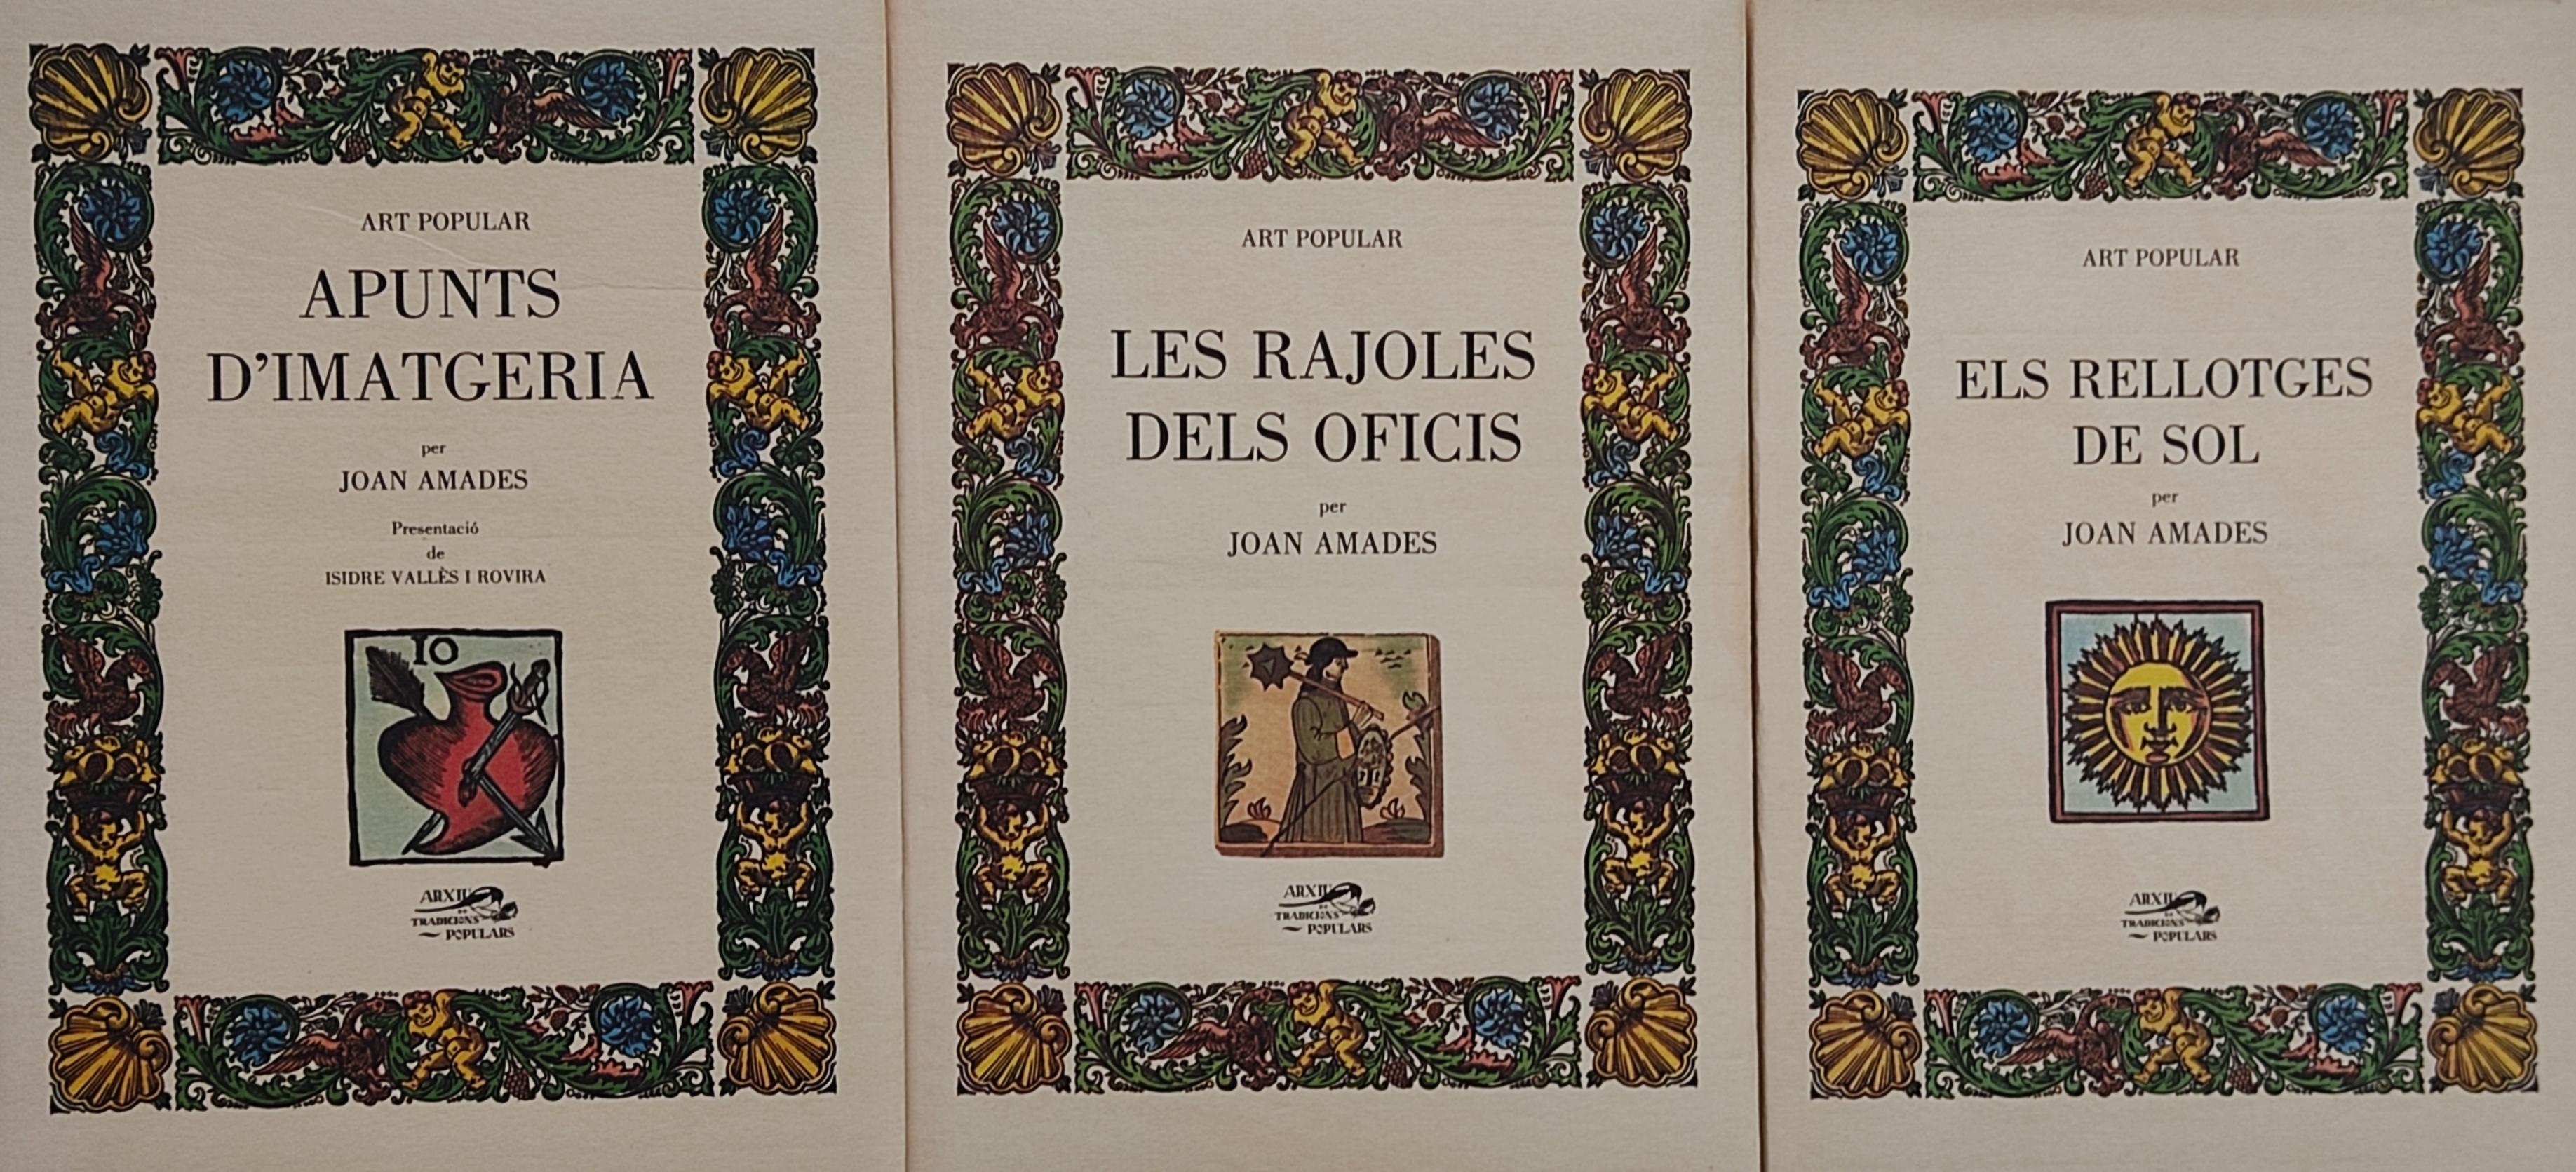 TRES LIBROS DE JOAN AMADES.   